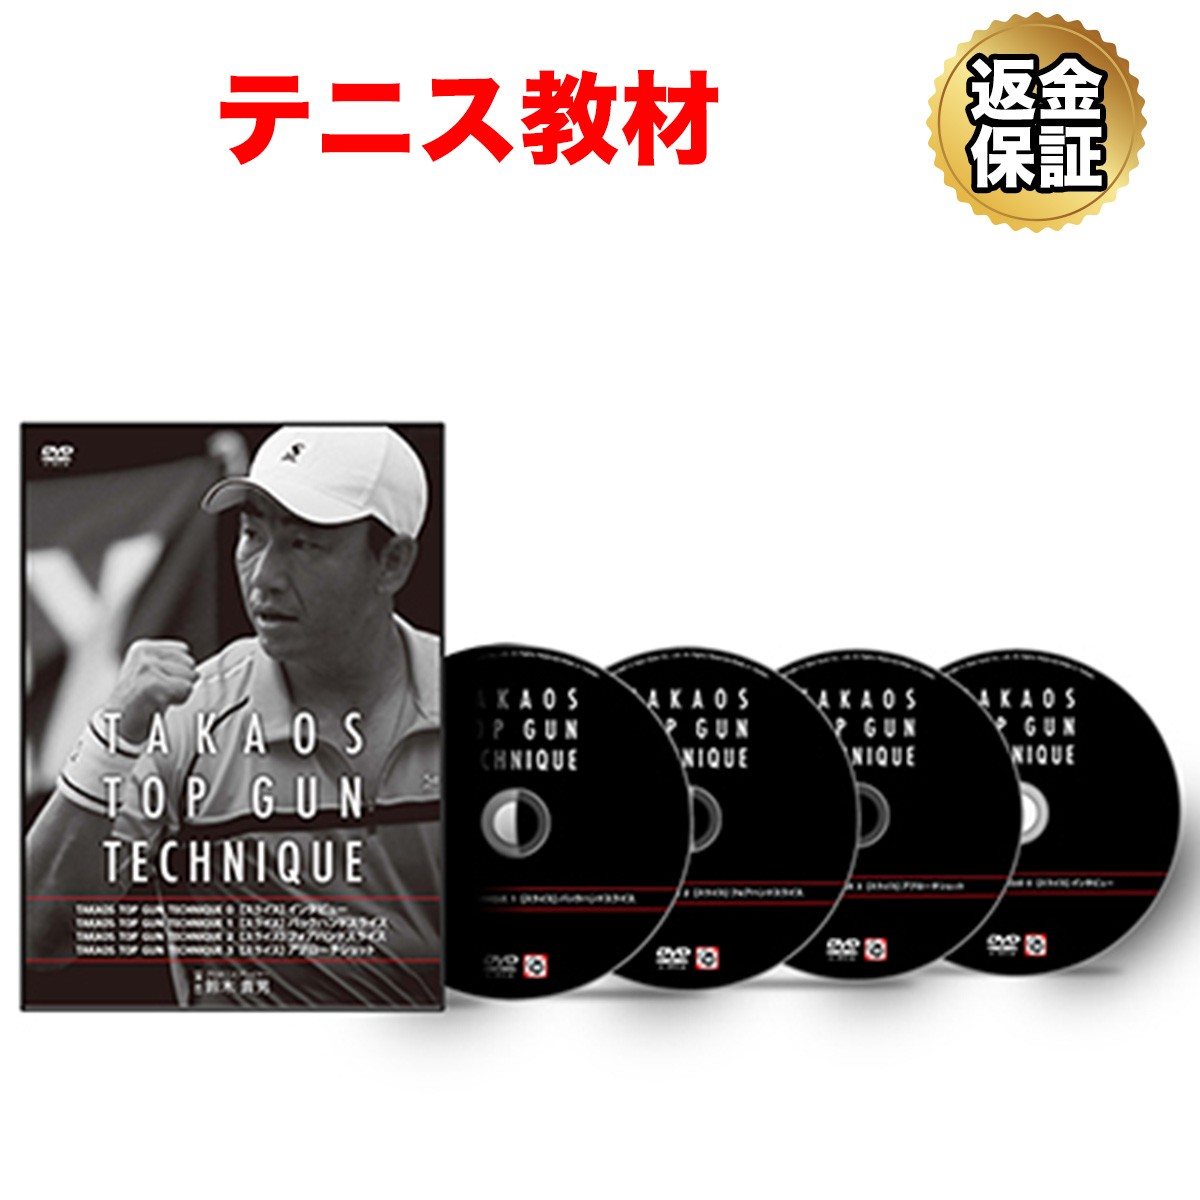  tennis teaching material DVD Suzuki . man. TOP GUN TECHNIQUE 00~03[ slice ]